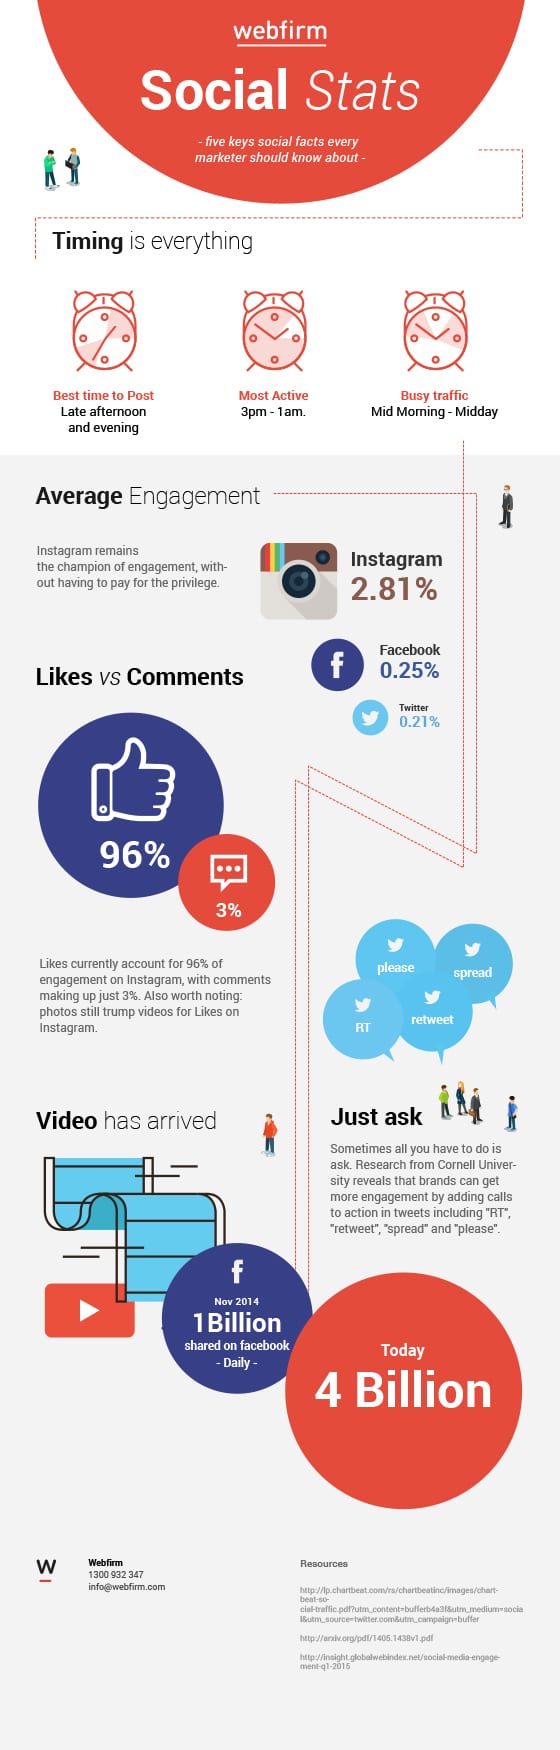 social media statistics - Webfirm Melbourne digital marketing agency